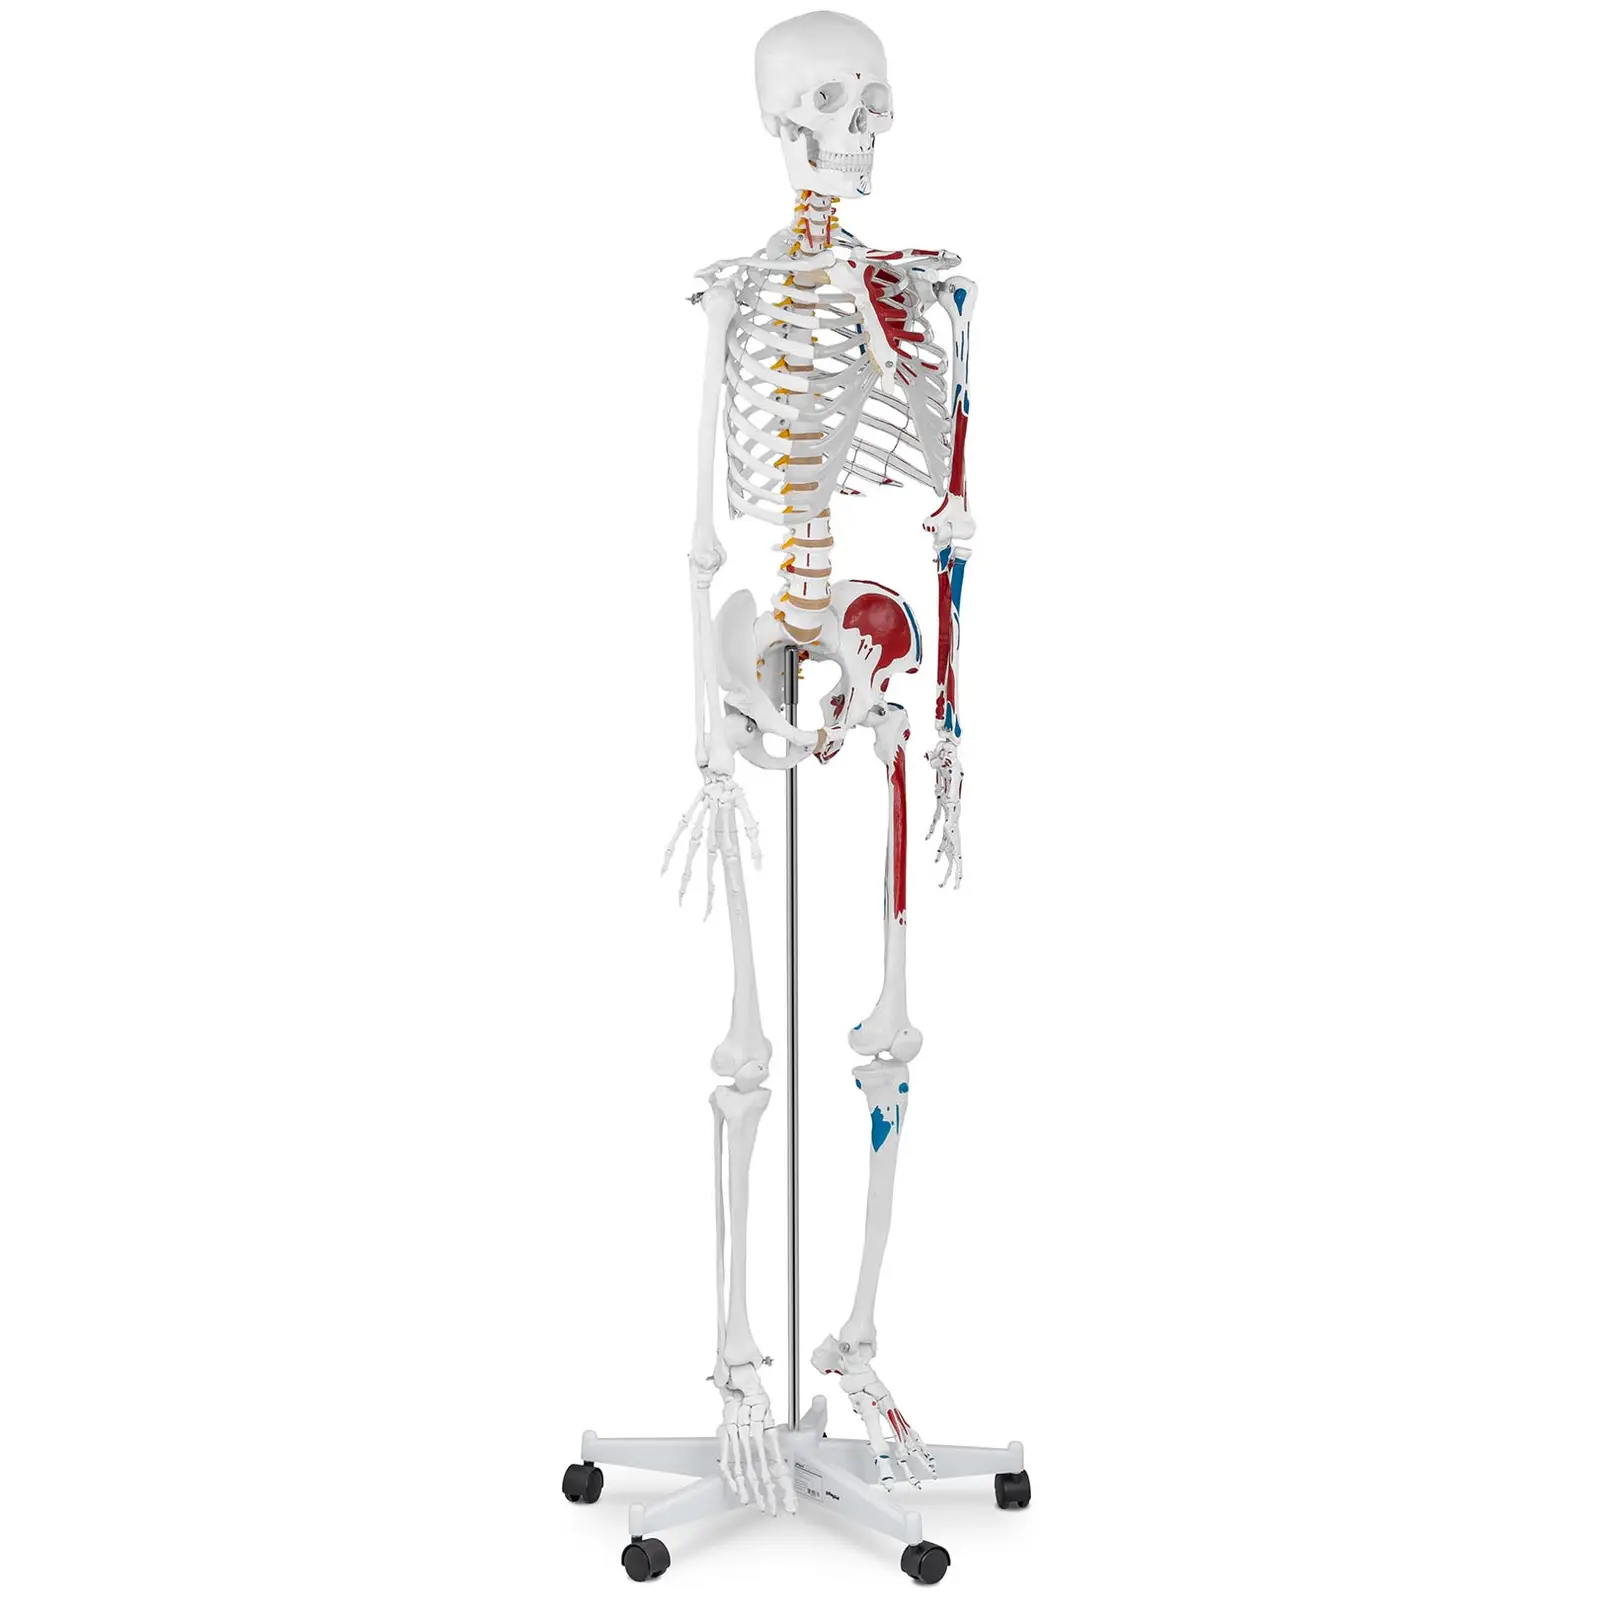 Modelo de esqueleto humano - tamanho natural - colorido